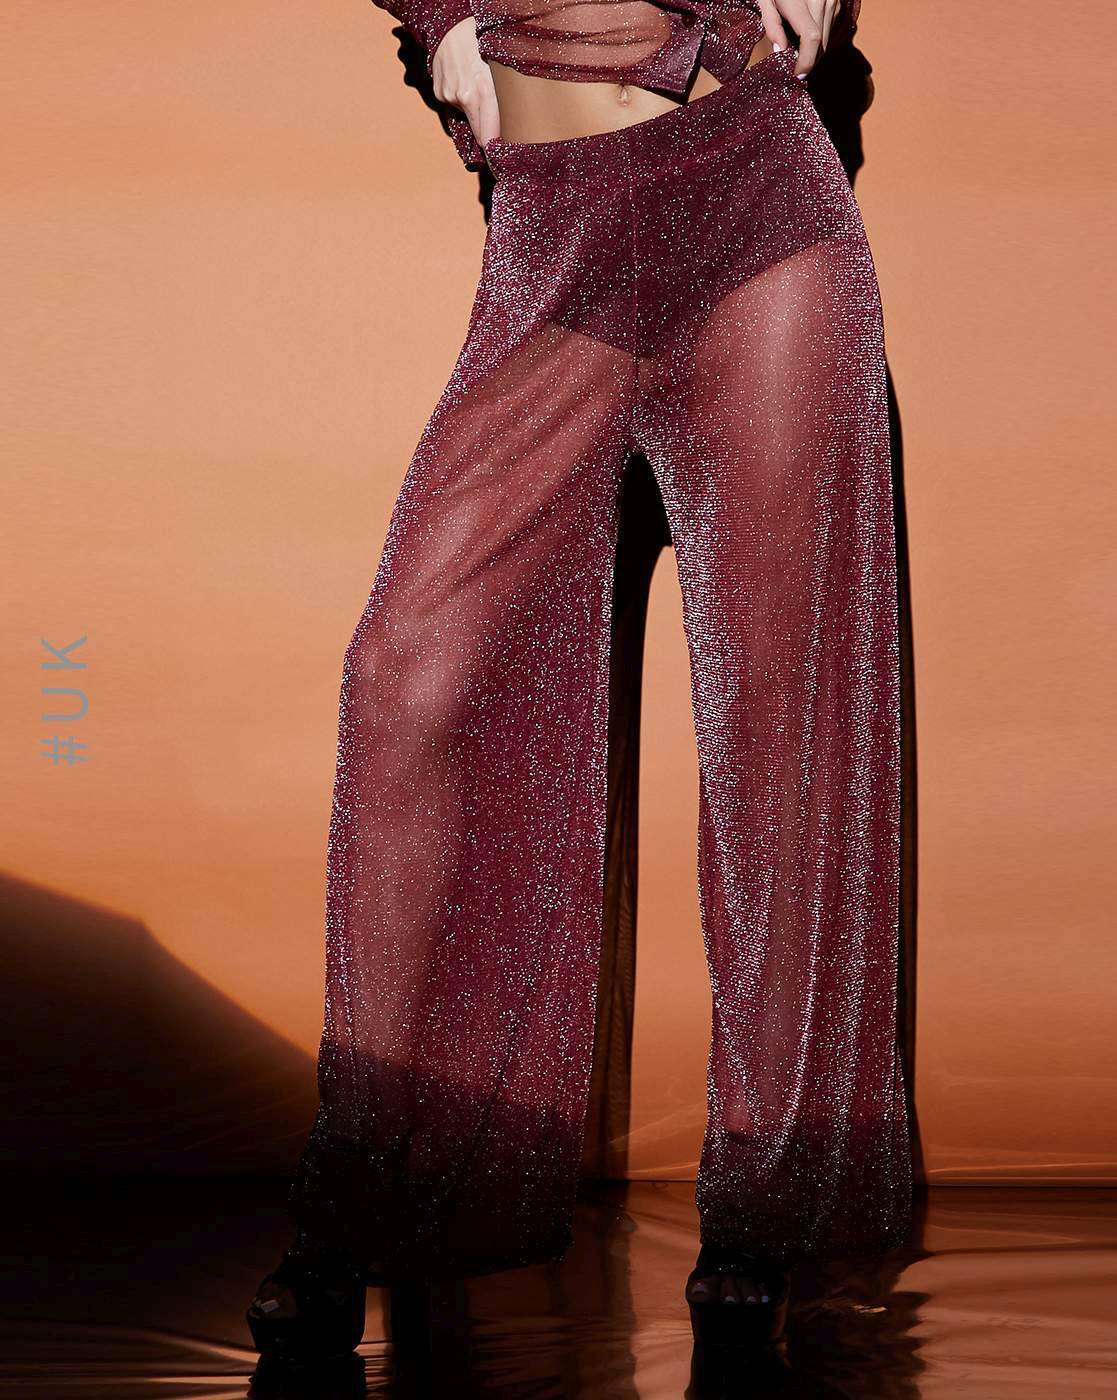 Alexandra Womens Work Trousers Health Uniform W640 Size 8 or 20 Uk NEW  Burgundy | eBay